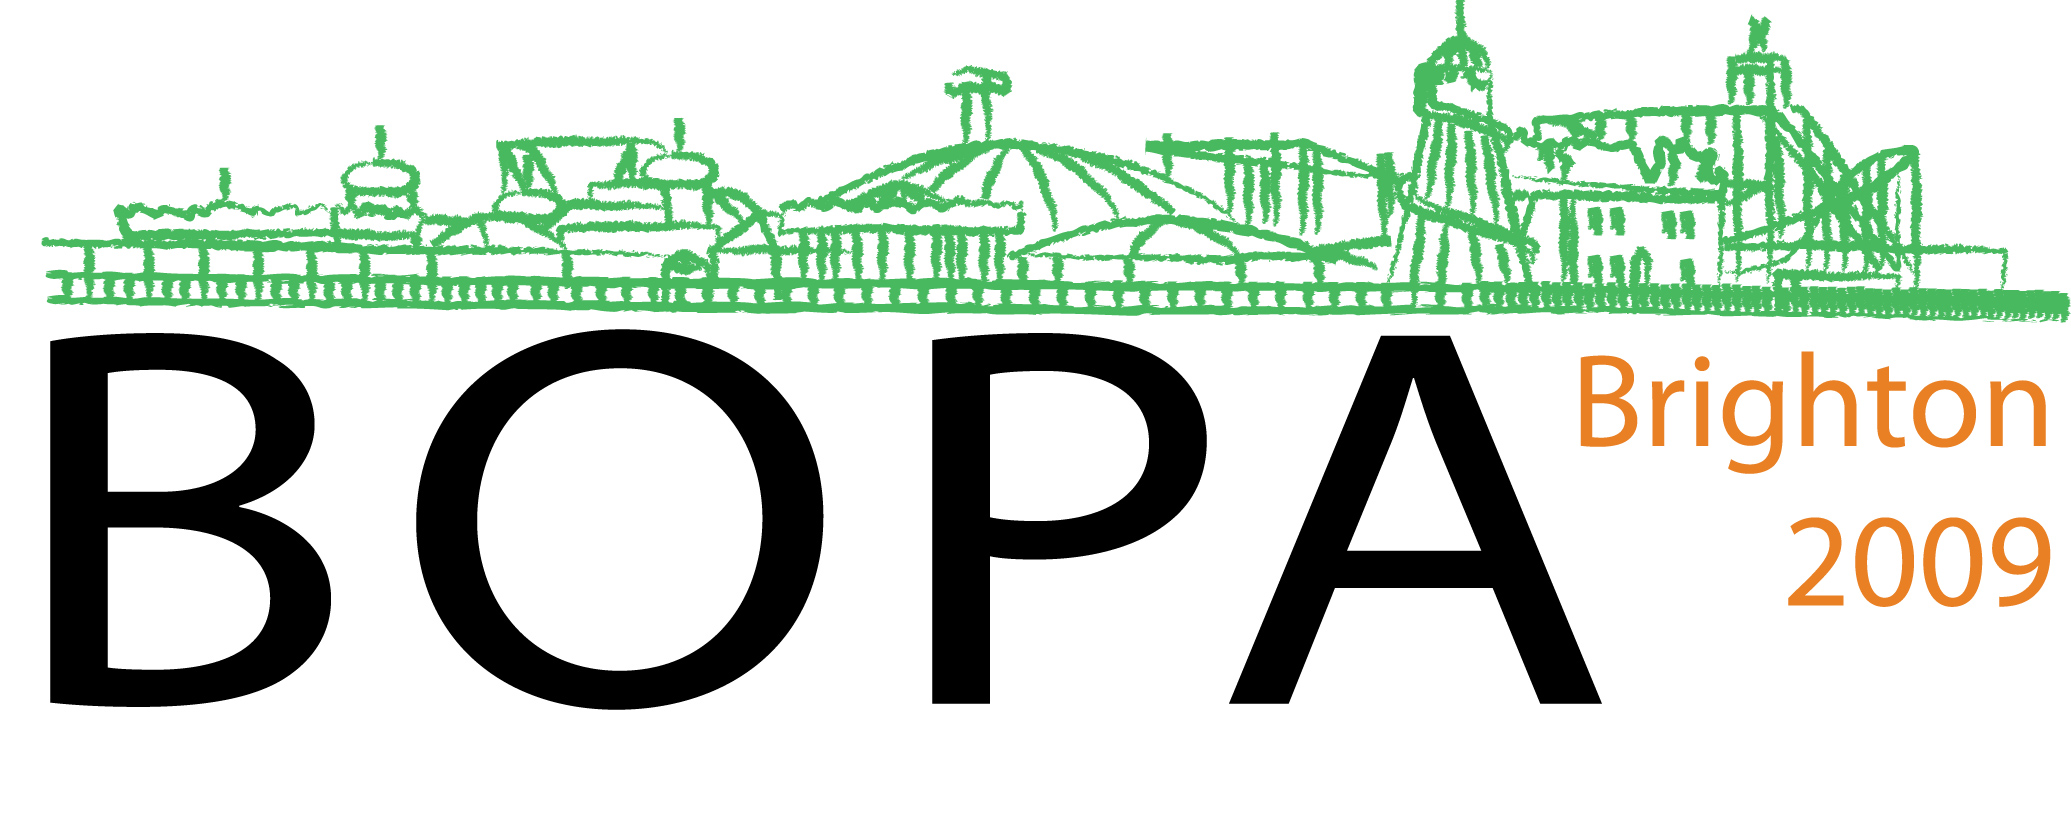 12th Annual BOPA Symposium Brighton 2009 logo